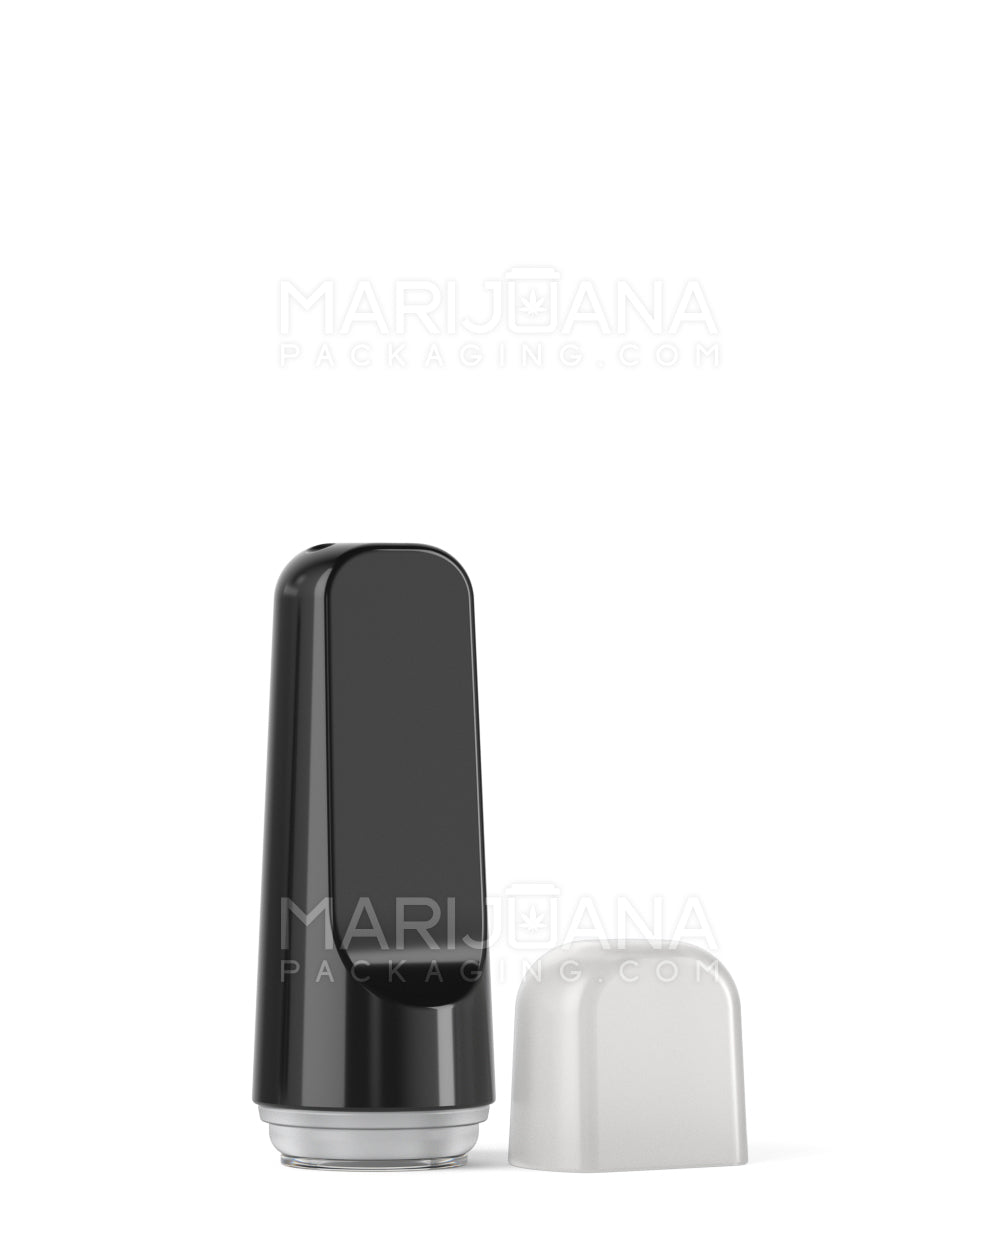 RAE | Flat Vape Mouthpiece for Hand Press Plastic Cartridges | Black Plastic - Hand Press - 400 Count - 8